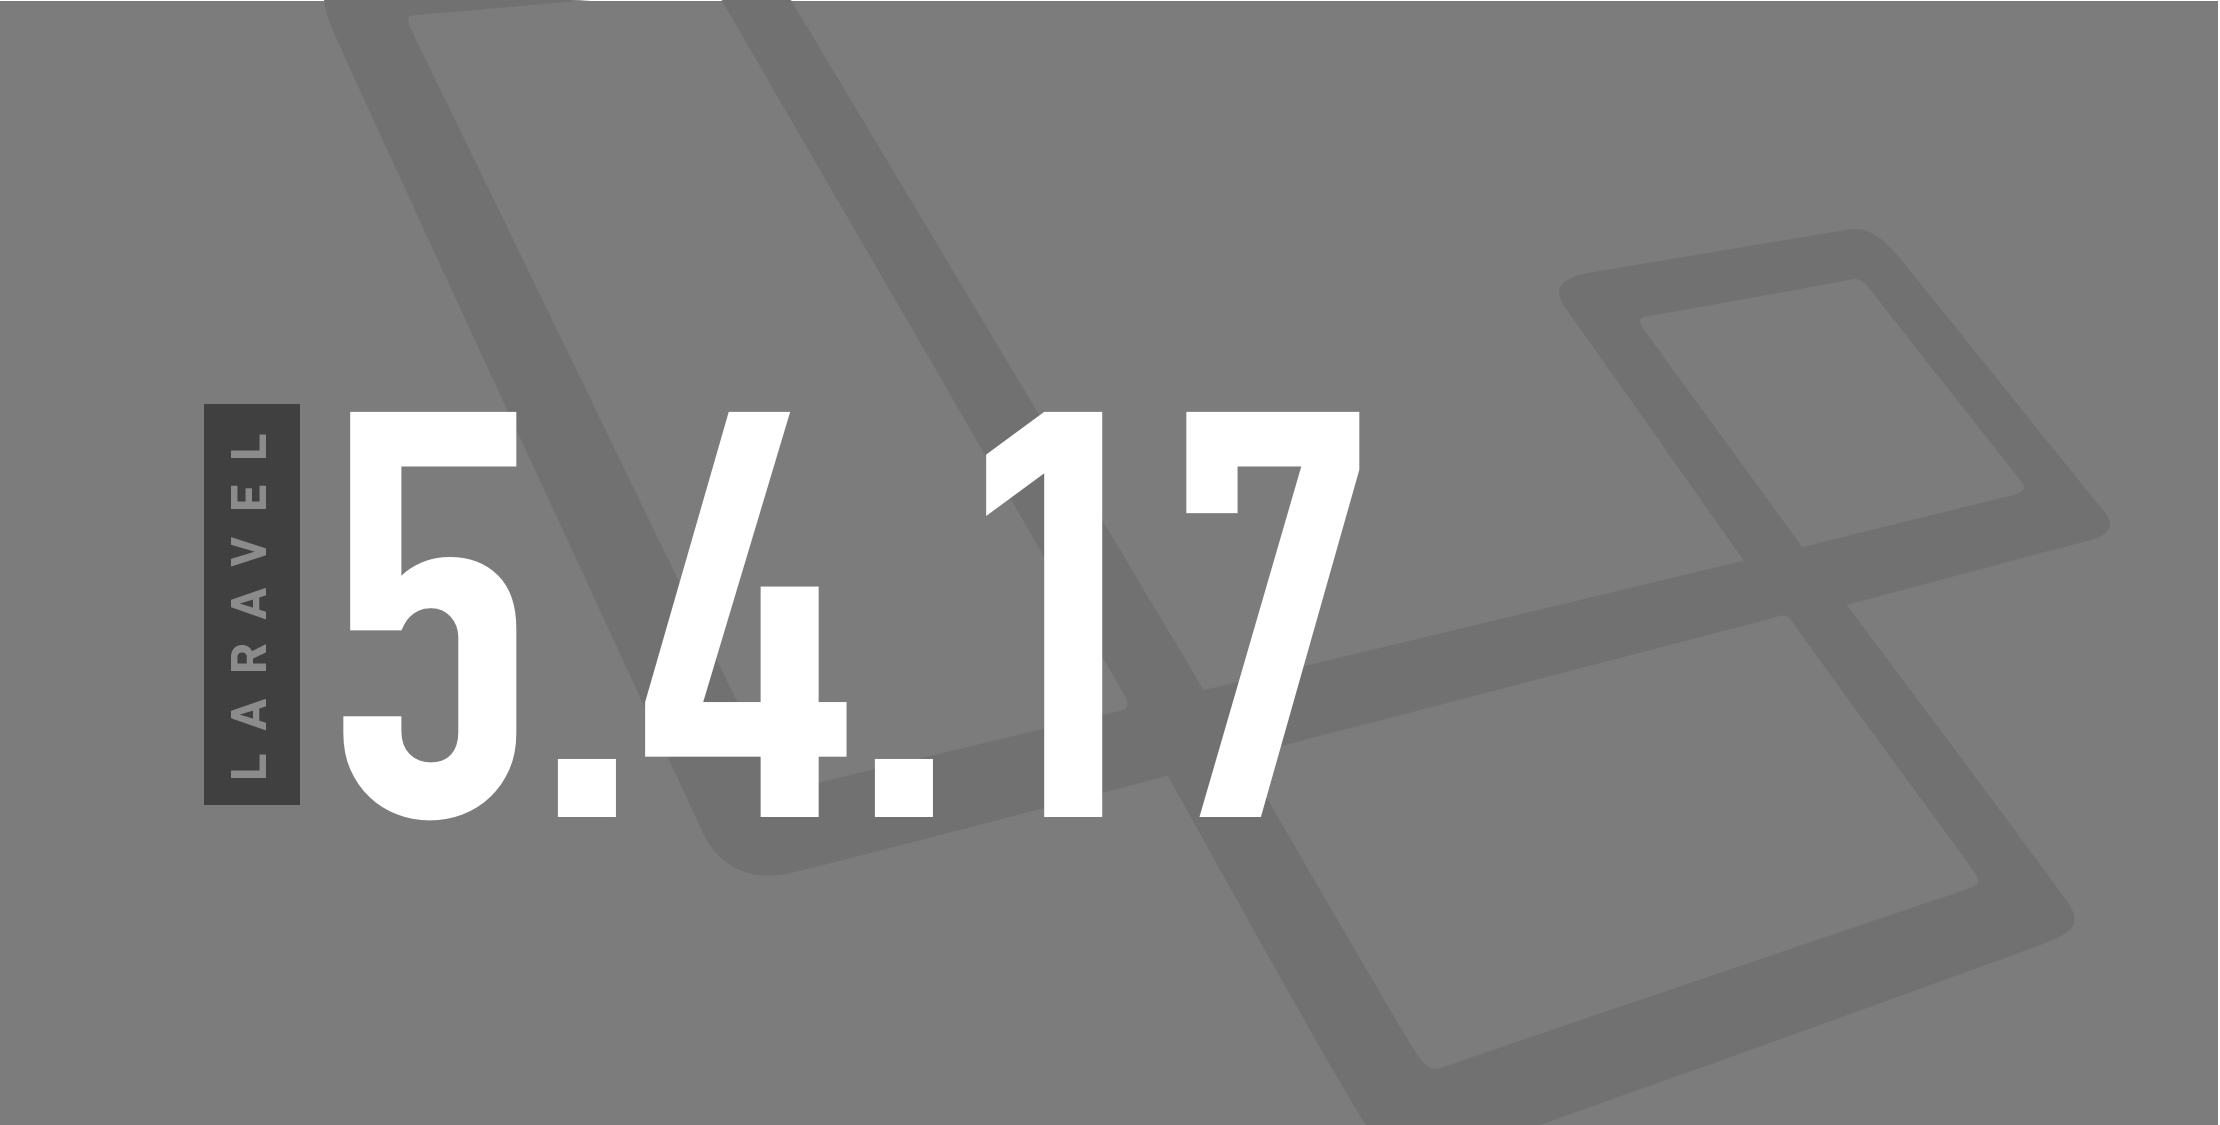 Laravel 5.4.17 is released image